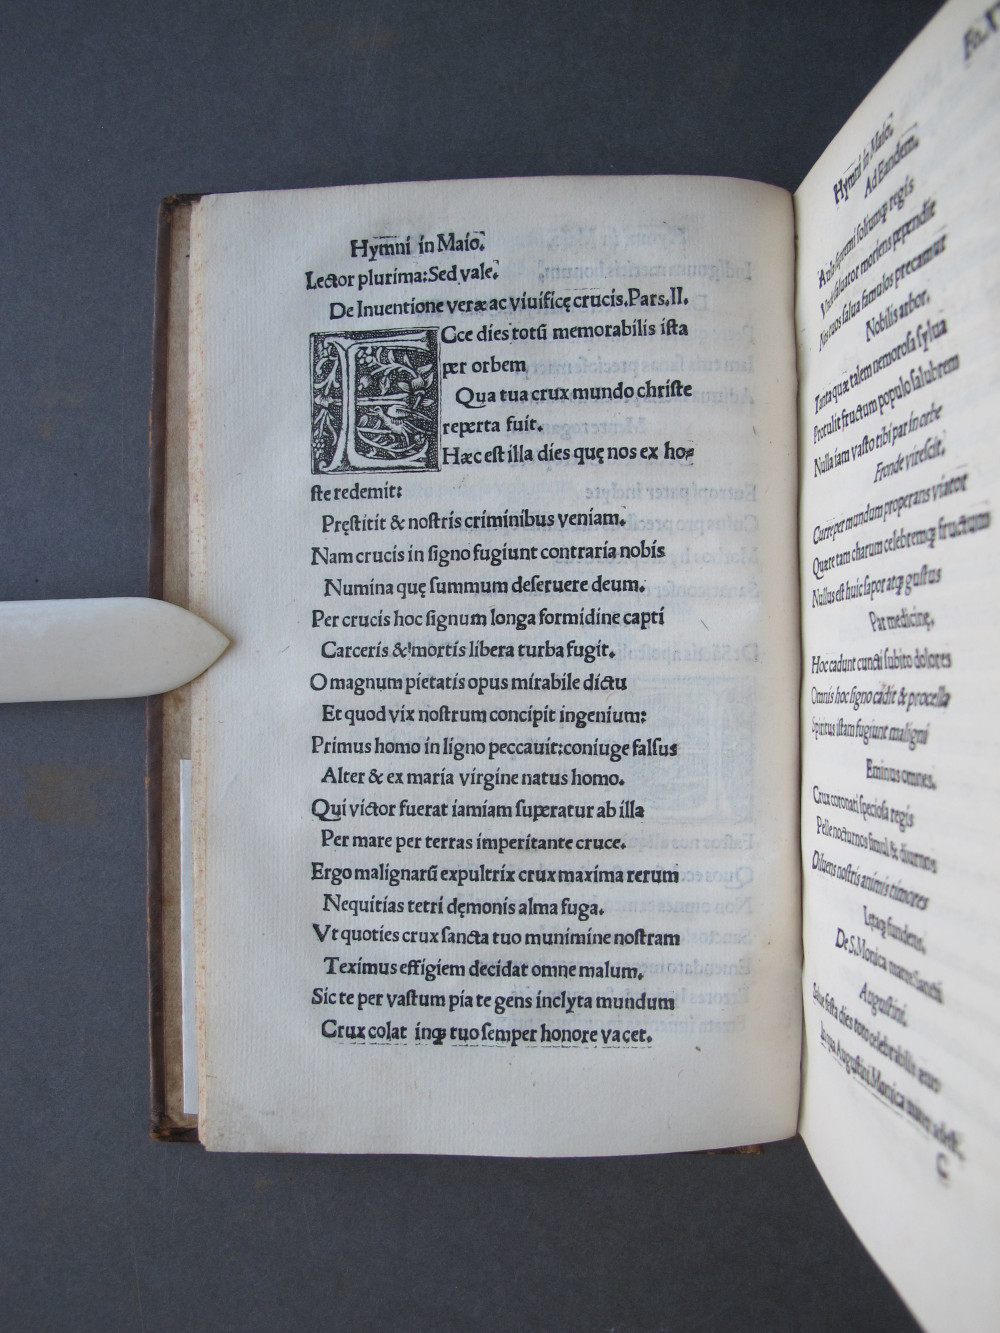 Folio 16 verso